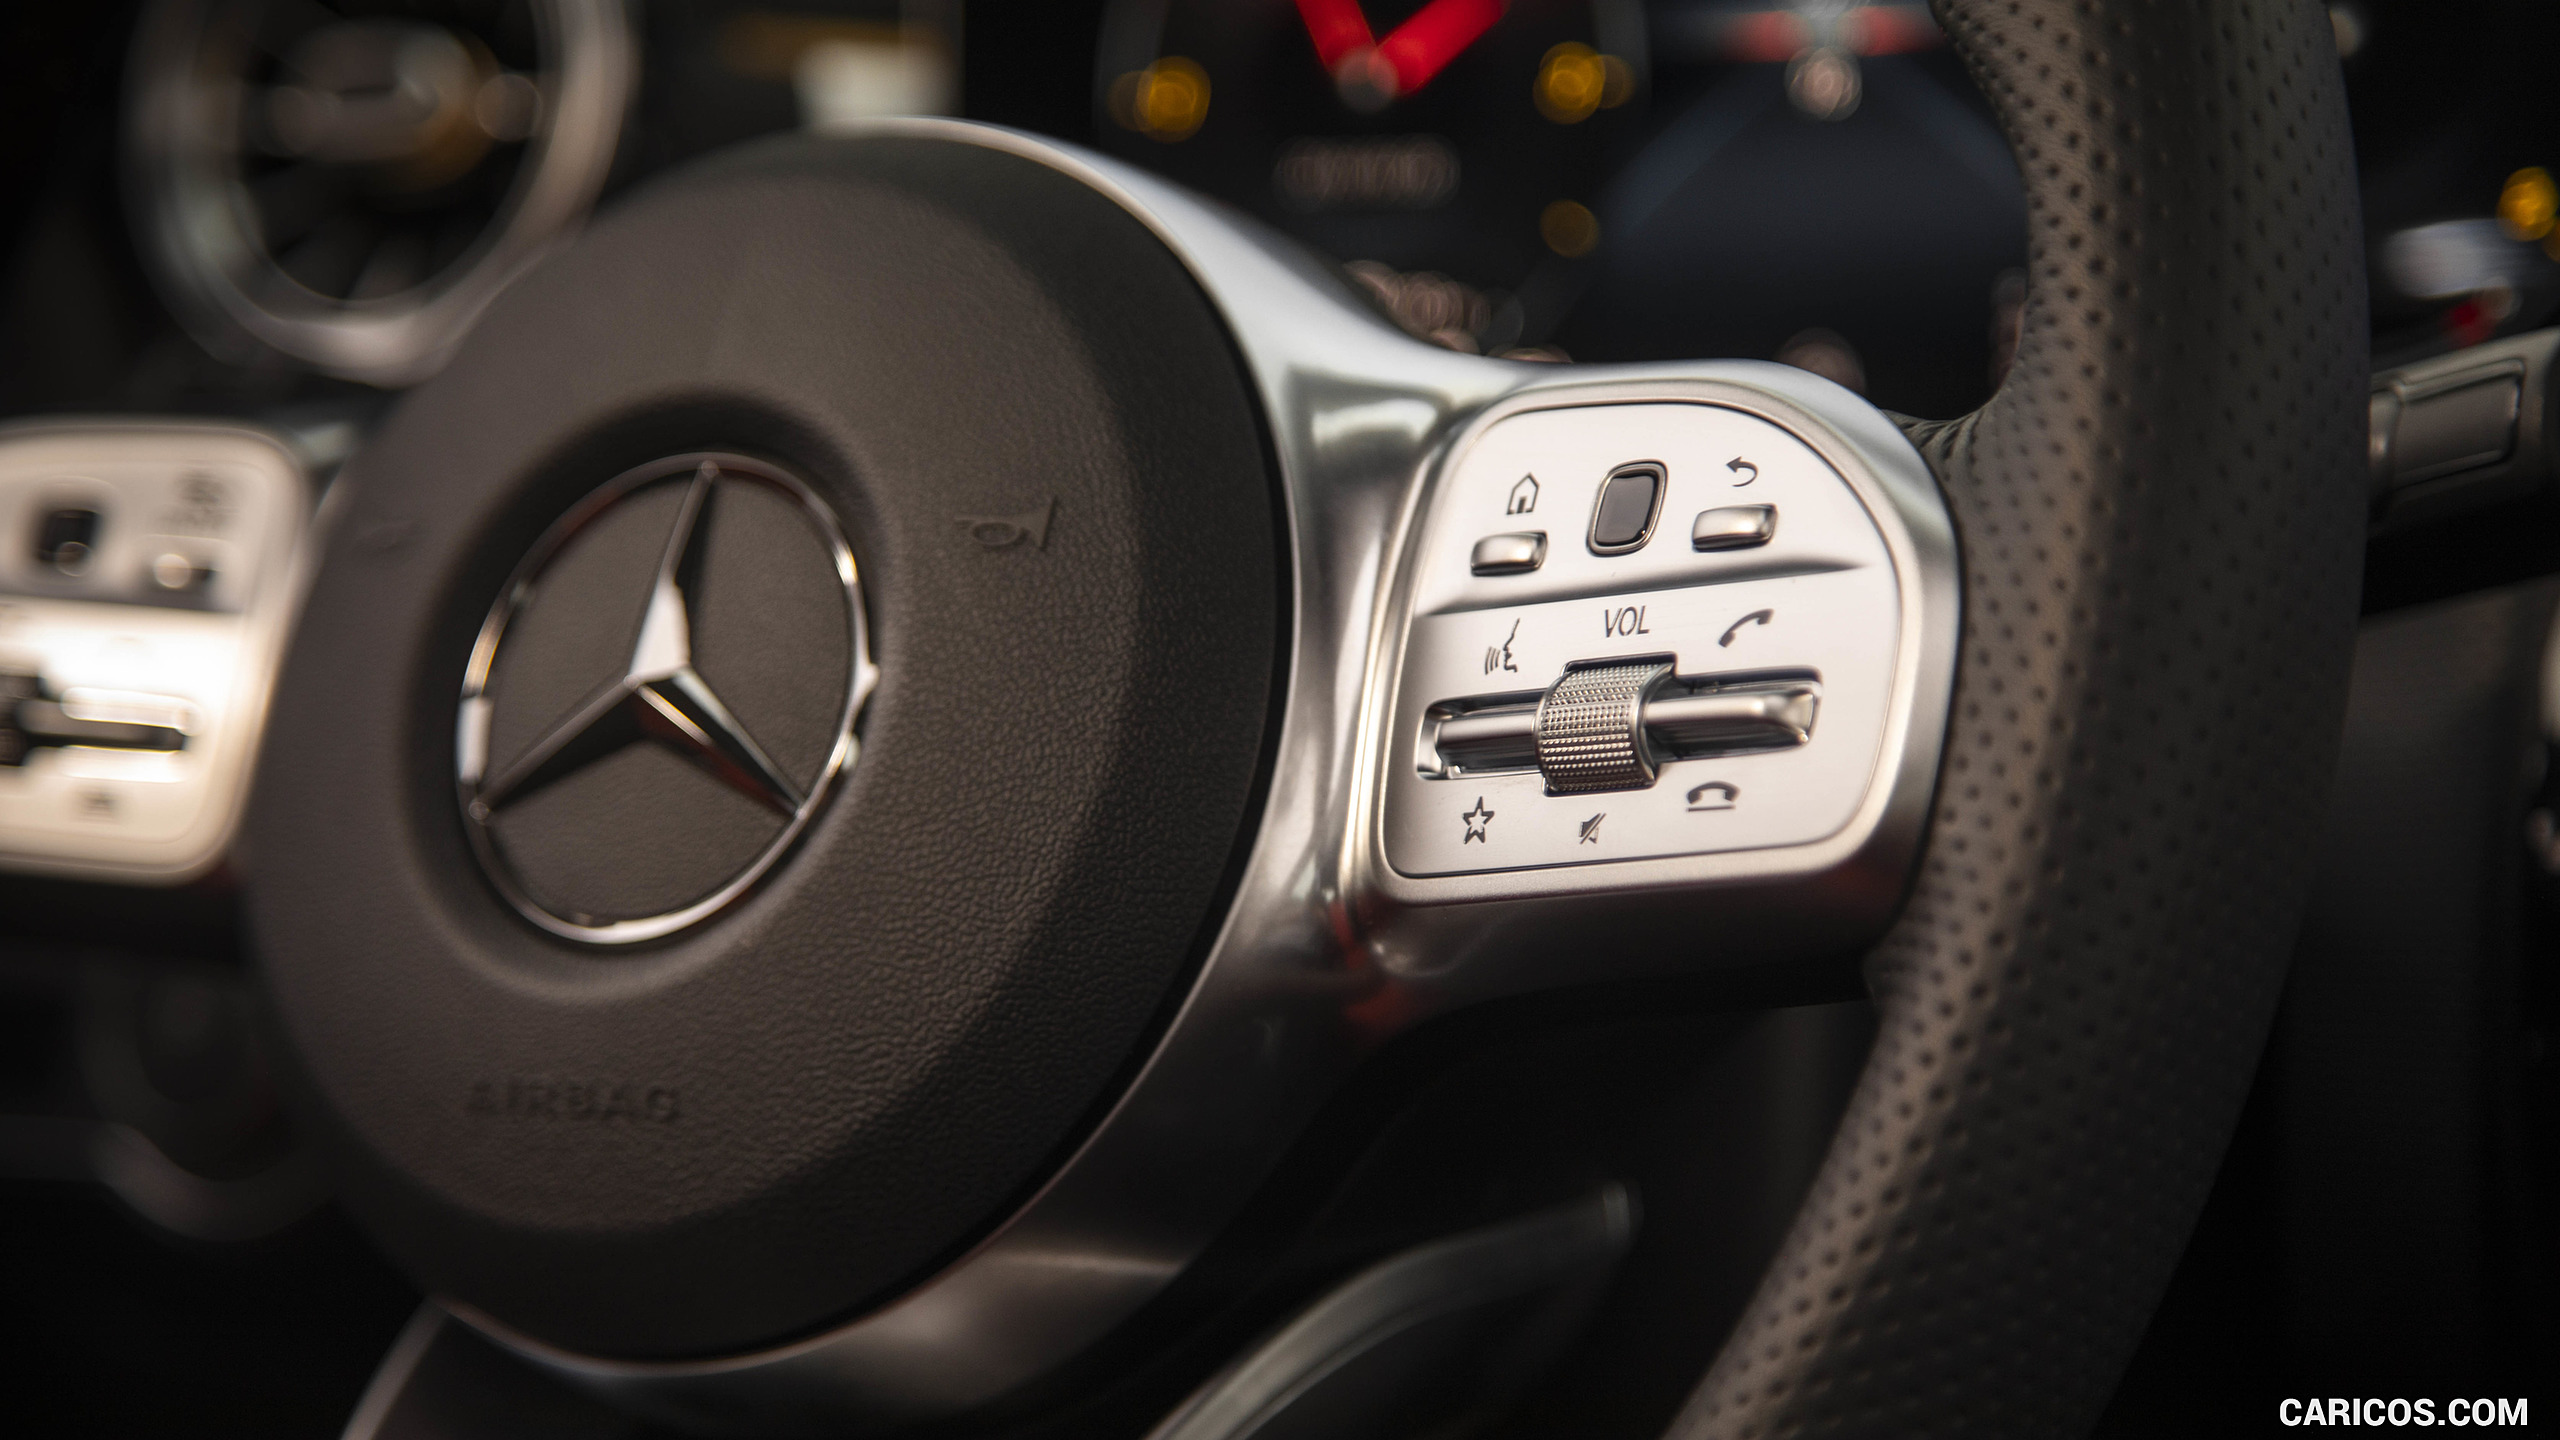 2019 Mercedes-Benz A220 4MATIC Sedan (US-Spec) - Interior, Steering Wheel, #99 of 214